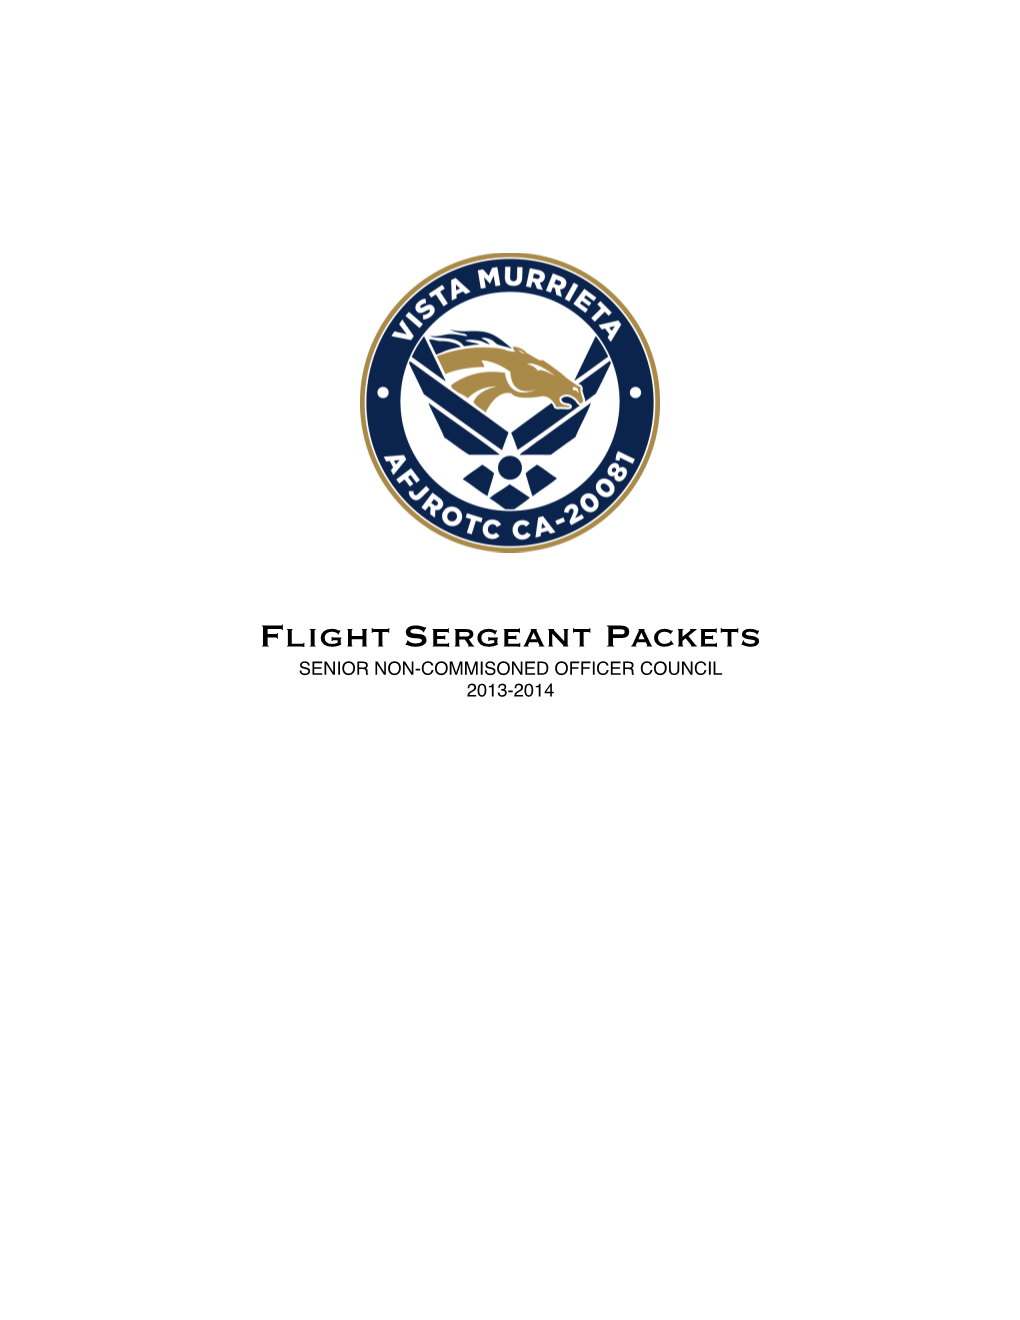 Flight Sergeant Packets SENIOR NON-COMMISONED OFFICER COUNCIL 2013-2014